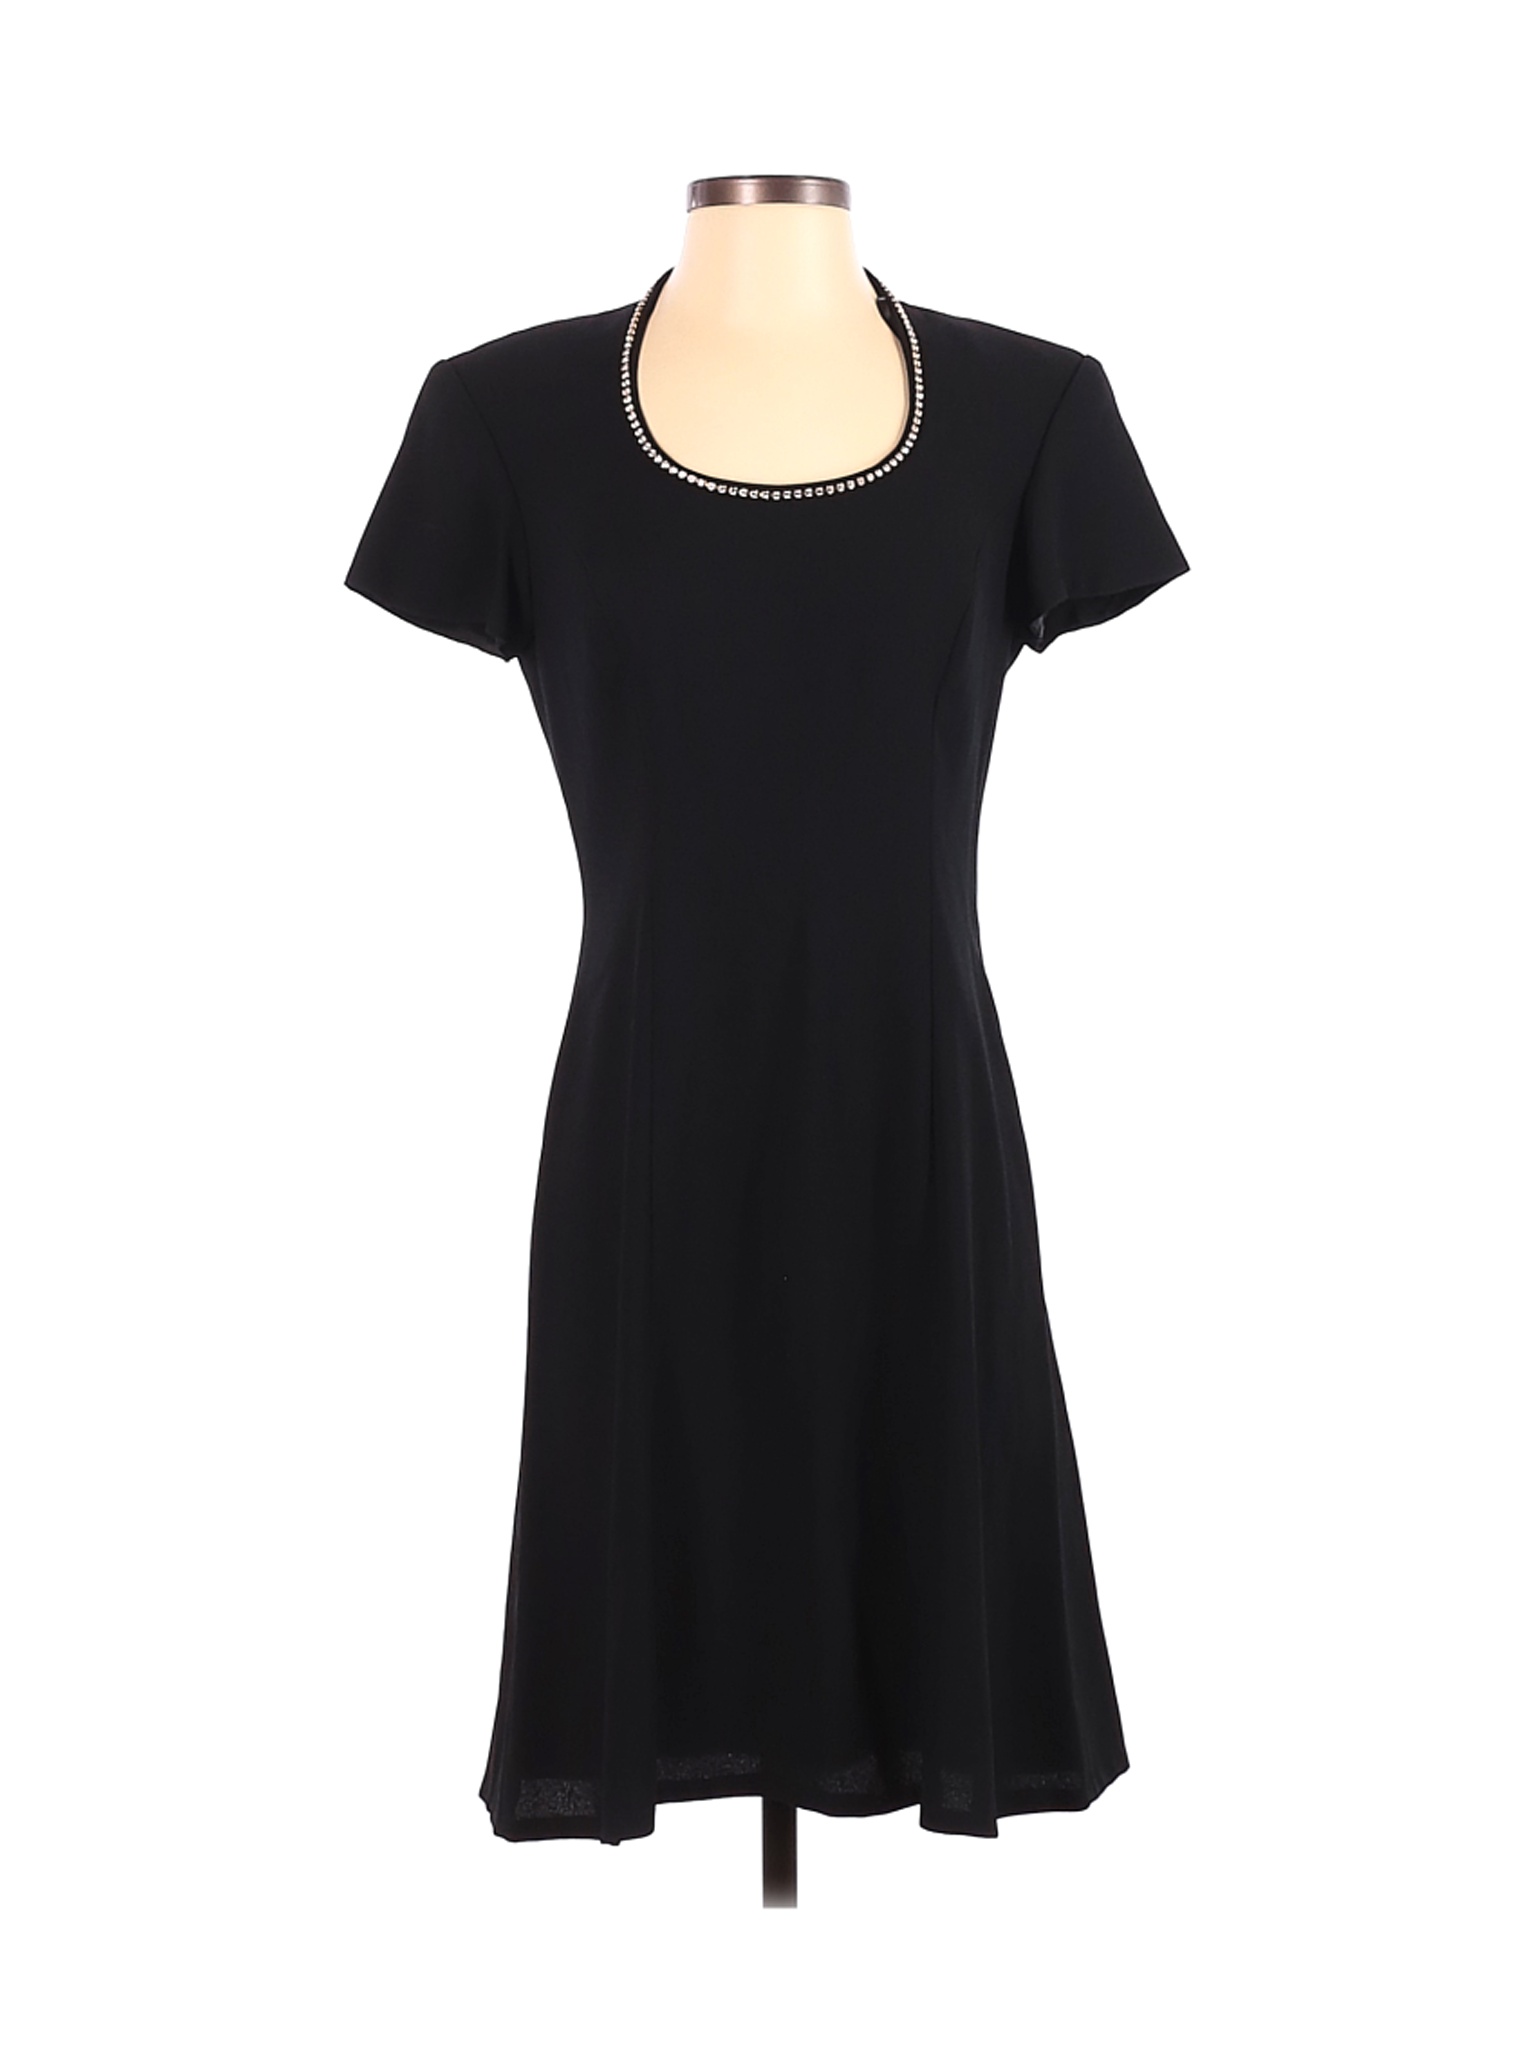 Liz Claiborne Women Black Cocktail Dress 4 | eBay